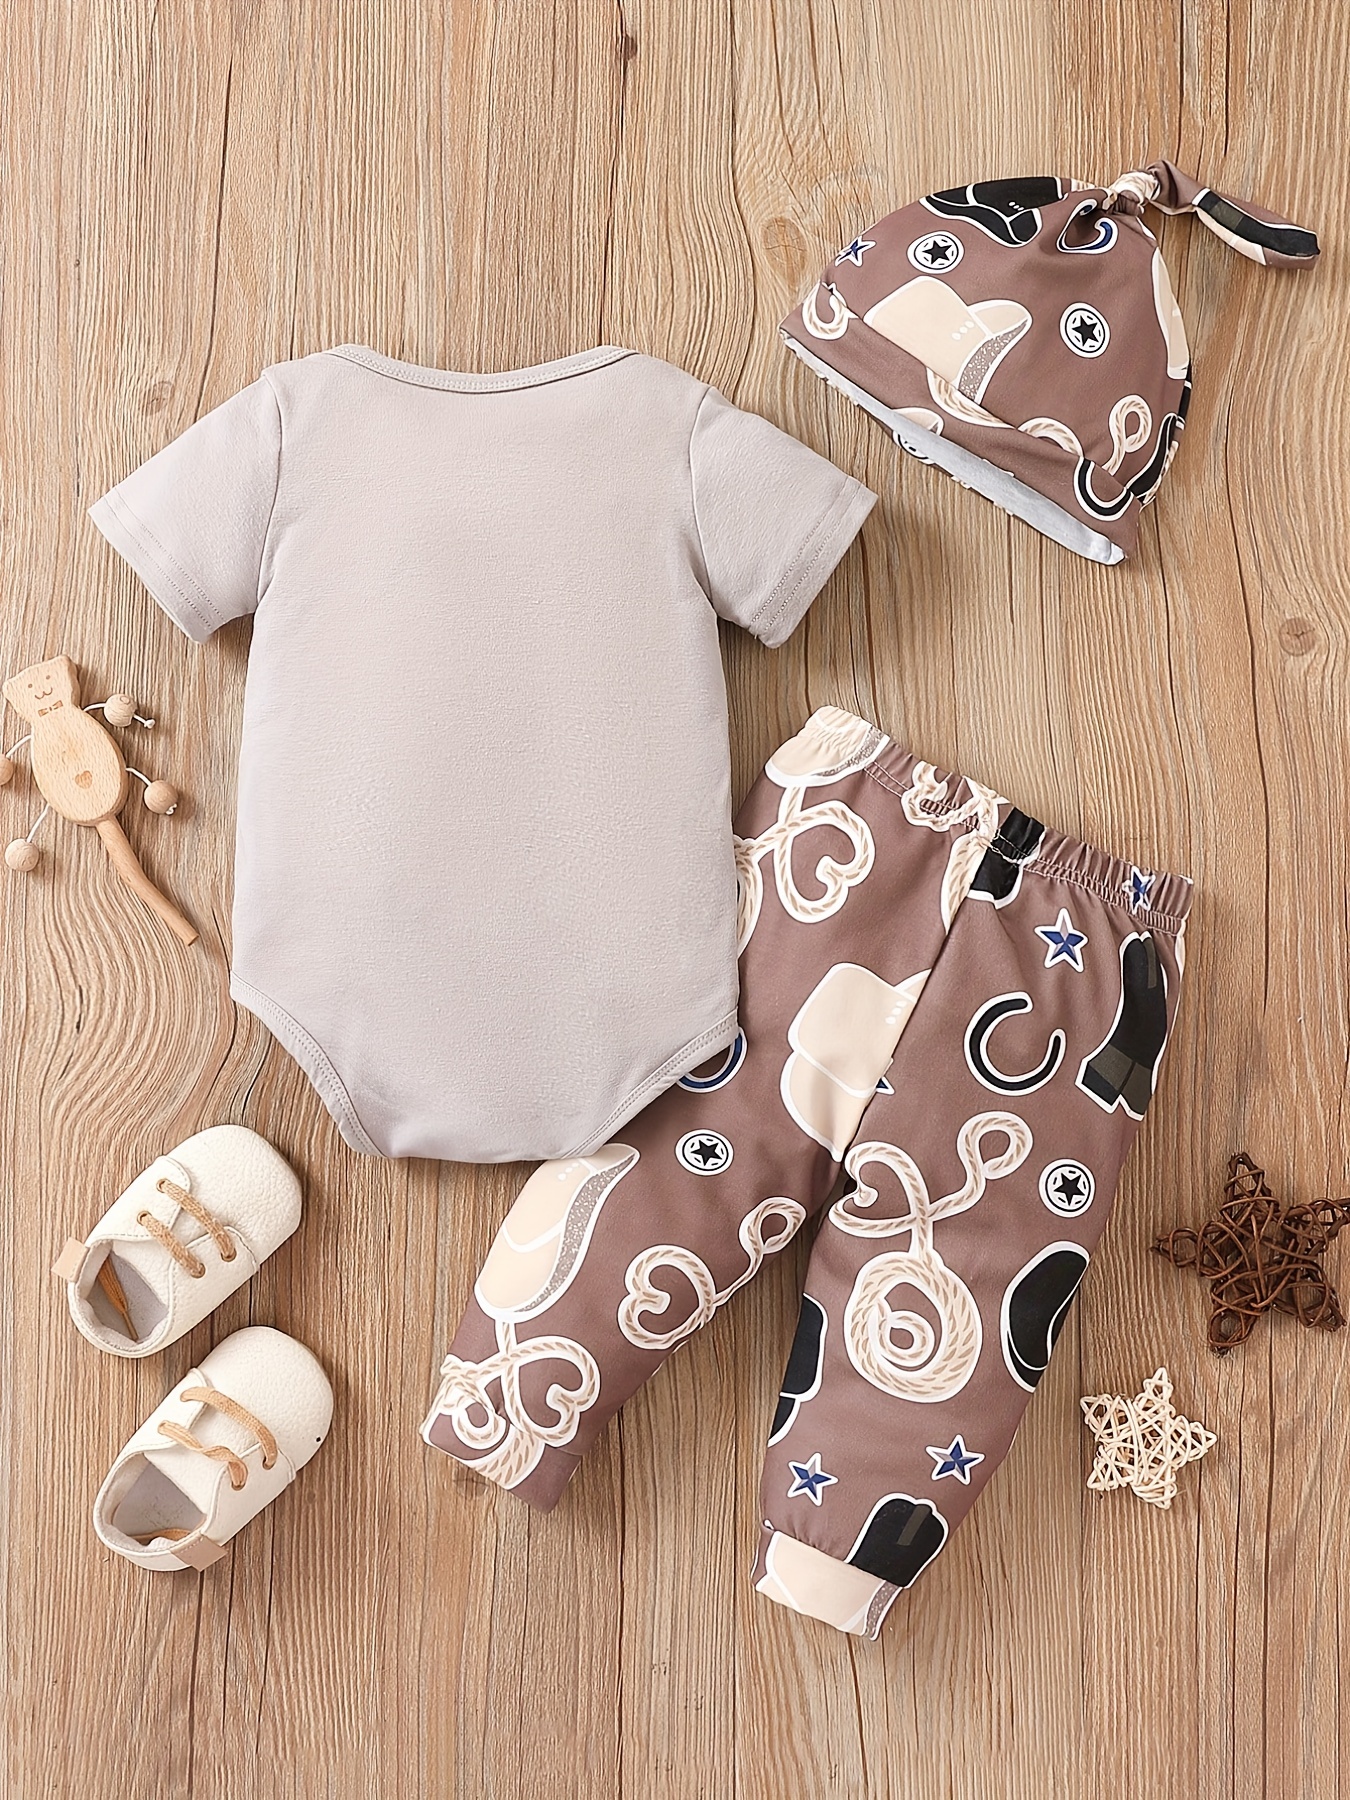  Newborn Infant Baby Girl Boy Romper+Cowboy Long Pants Hat 3pcs  Outfit Set: Clothing, Shoes & Jewelry